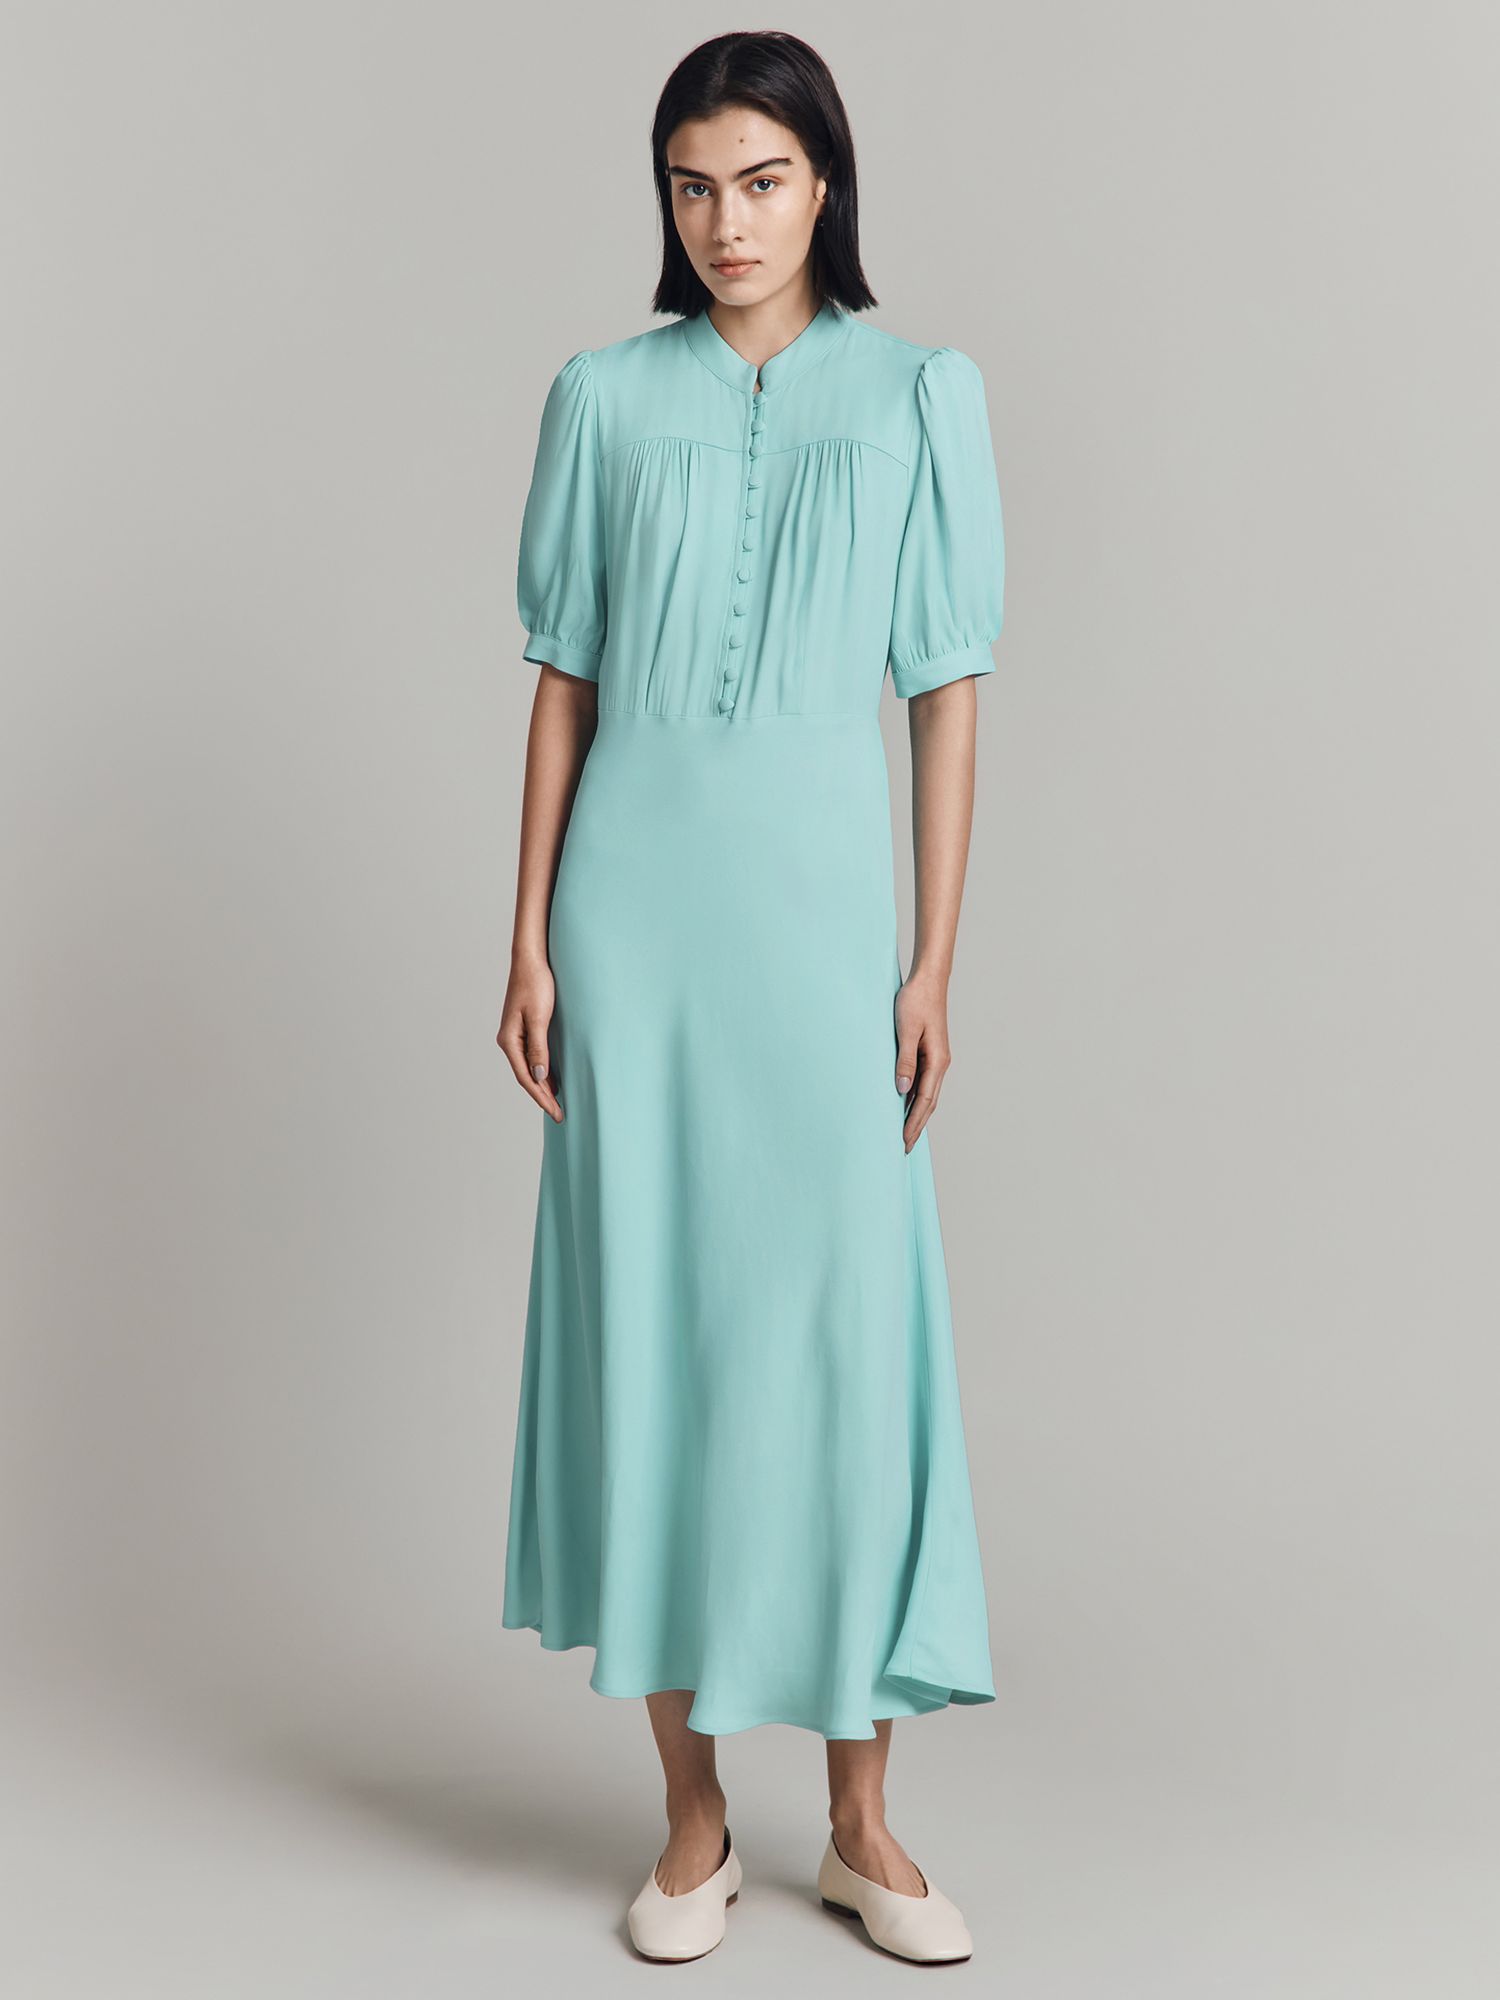 Ghost Adele Puff Sleeve Crepe Midaxi Dress, Light Blue, XS